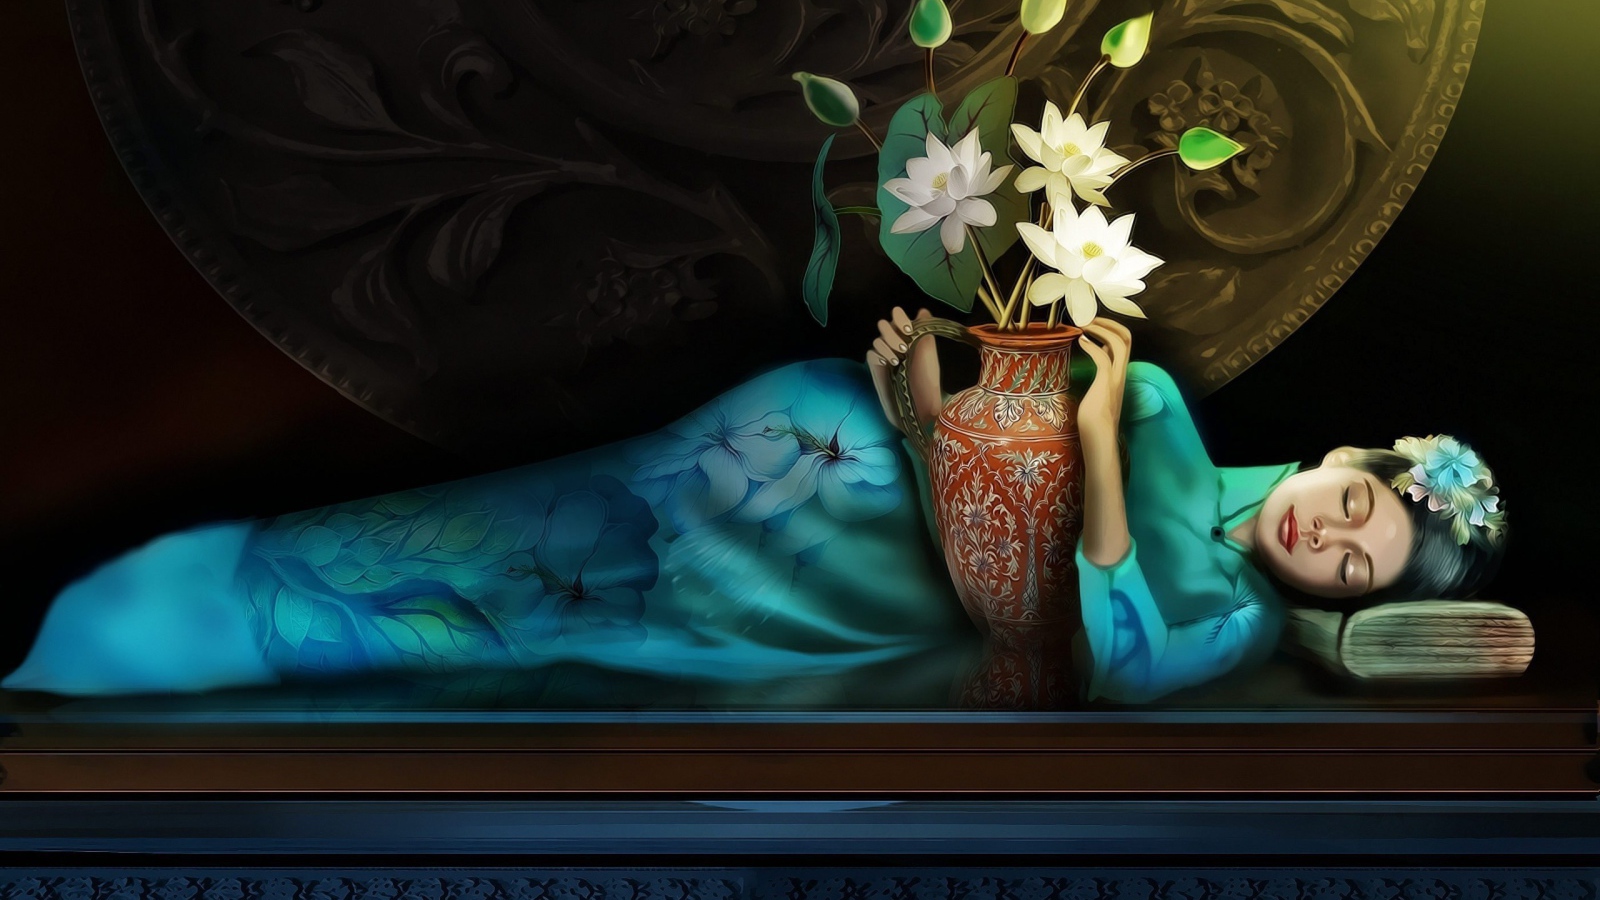 Девушка спит в обнимку с вазой